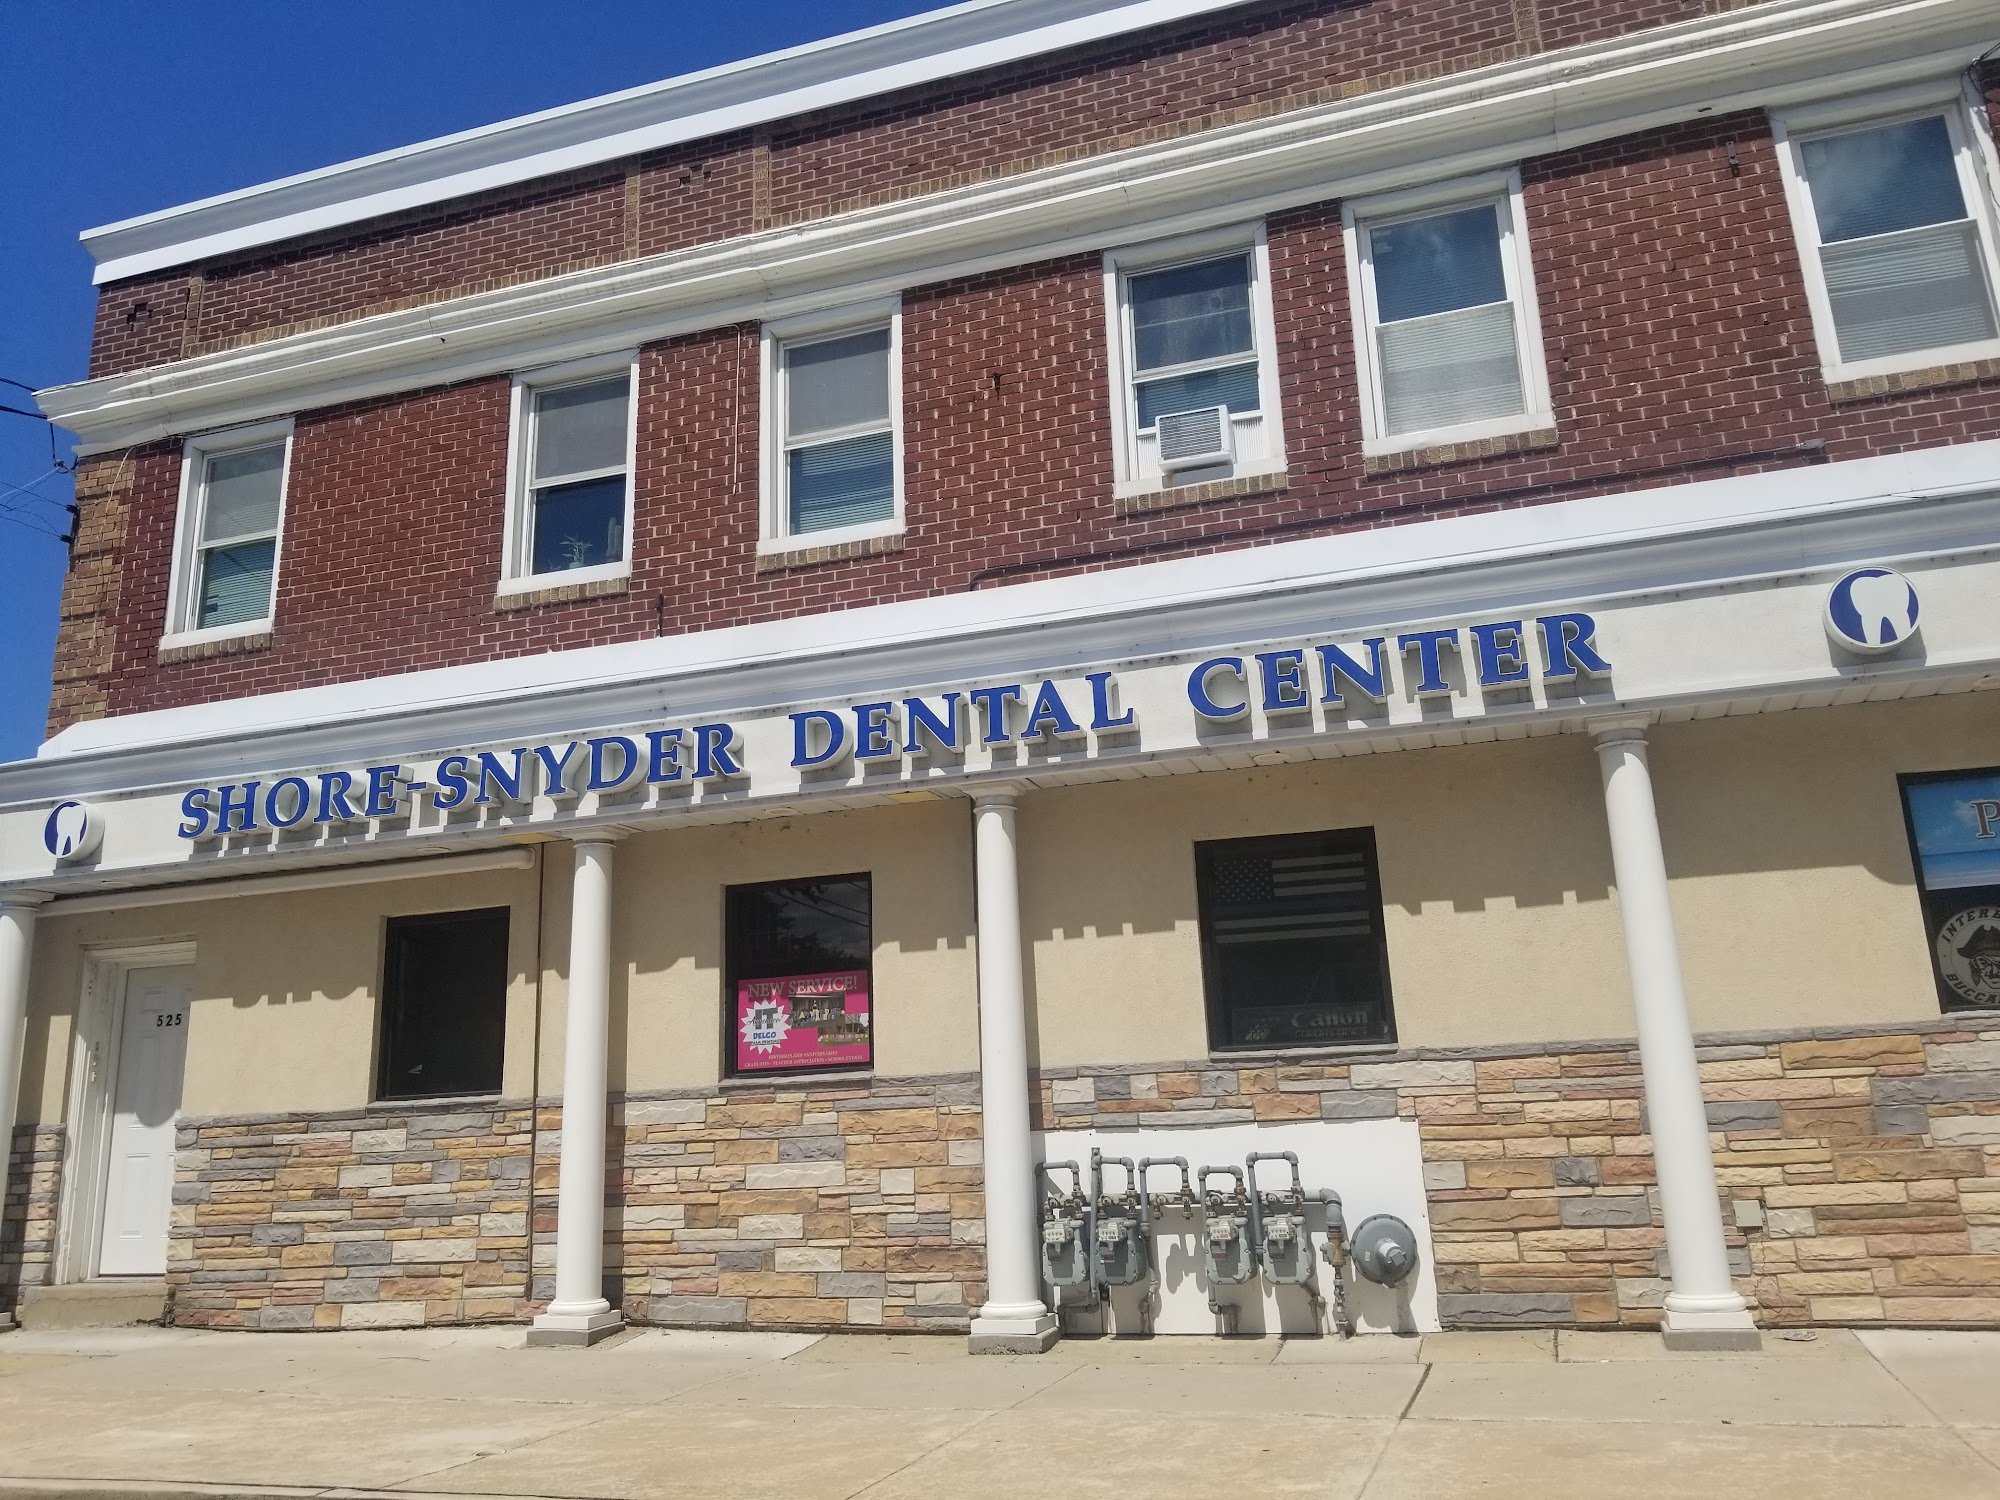 Shore Snyder Dental Center